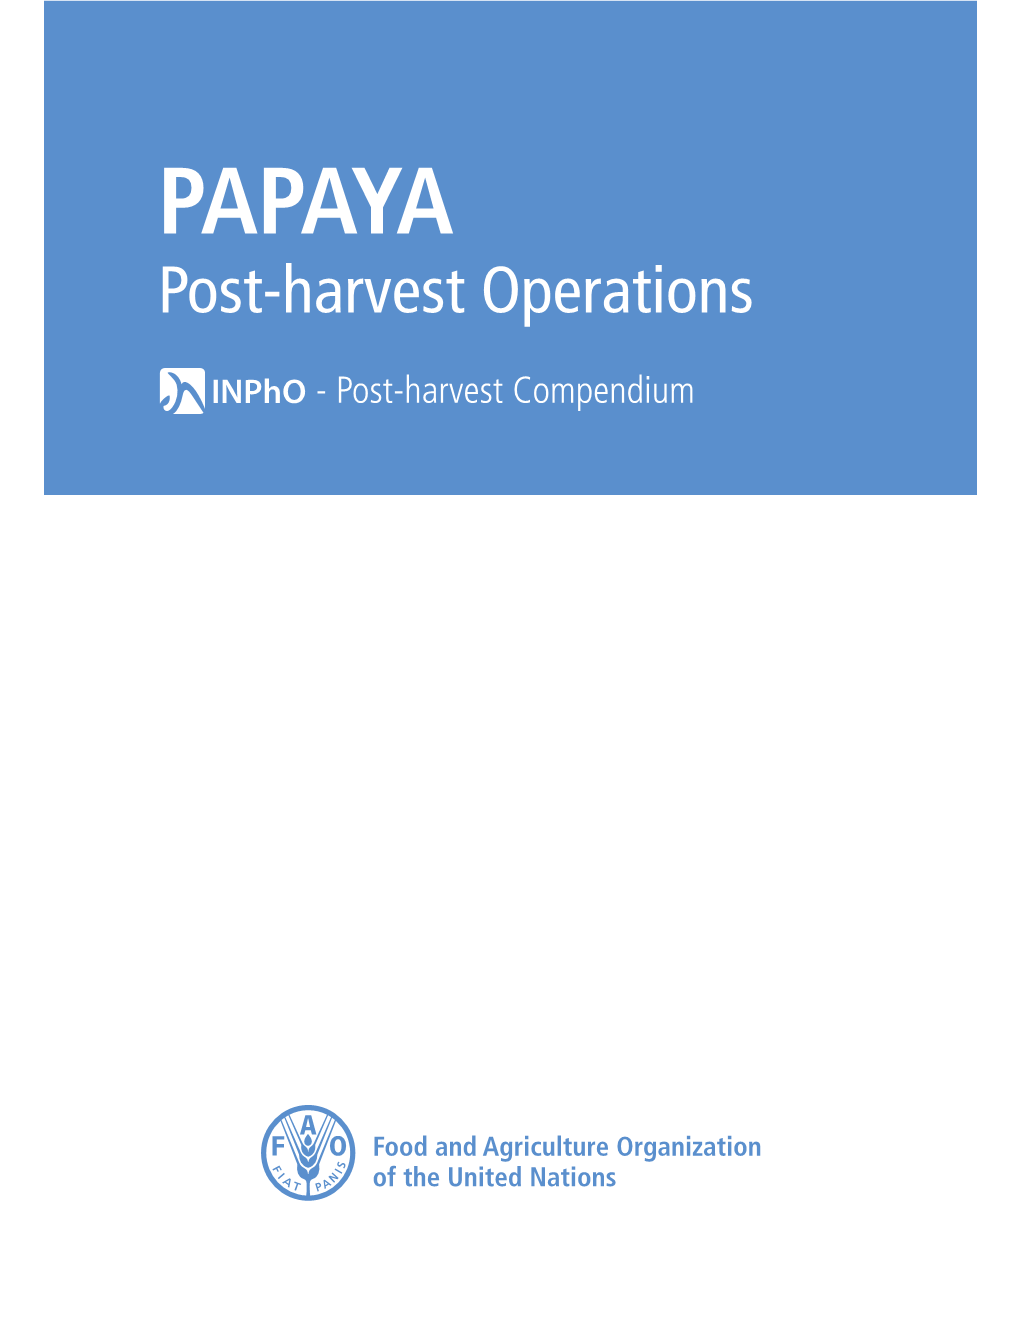 Papaya Post Harvest Operations